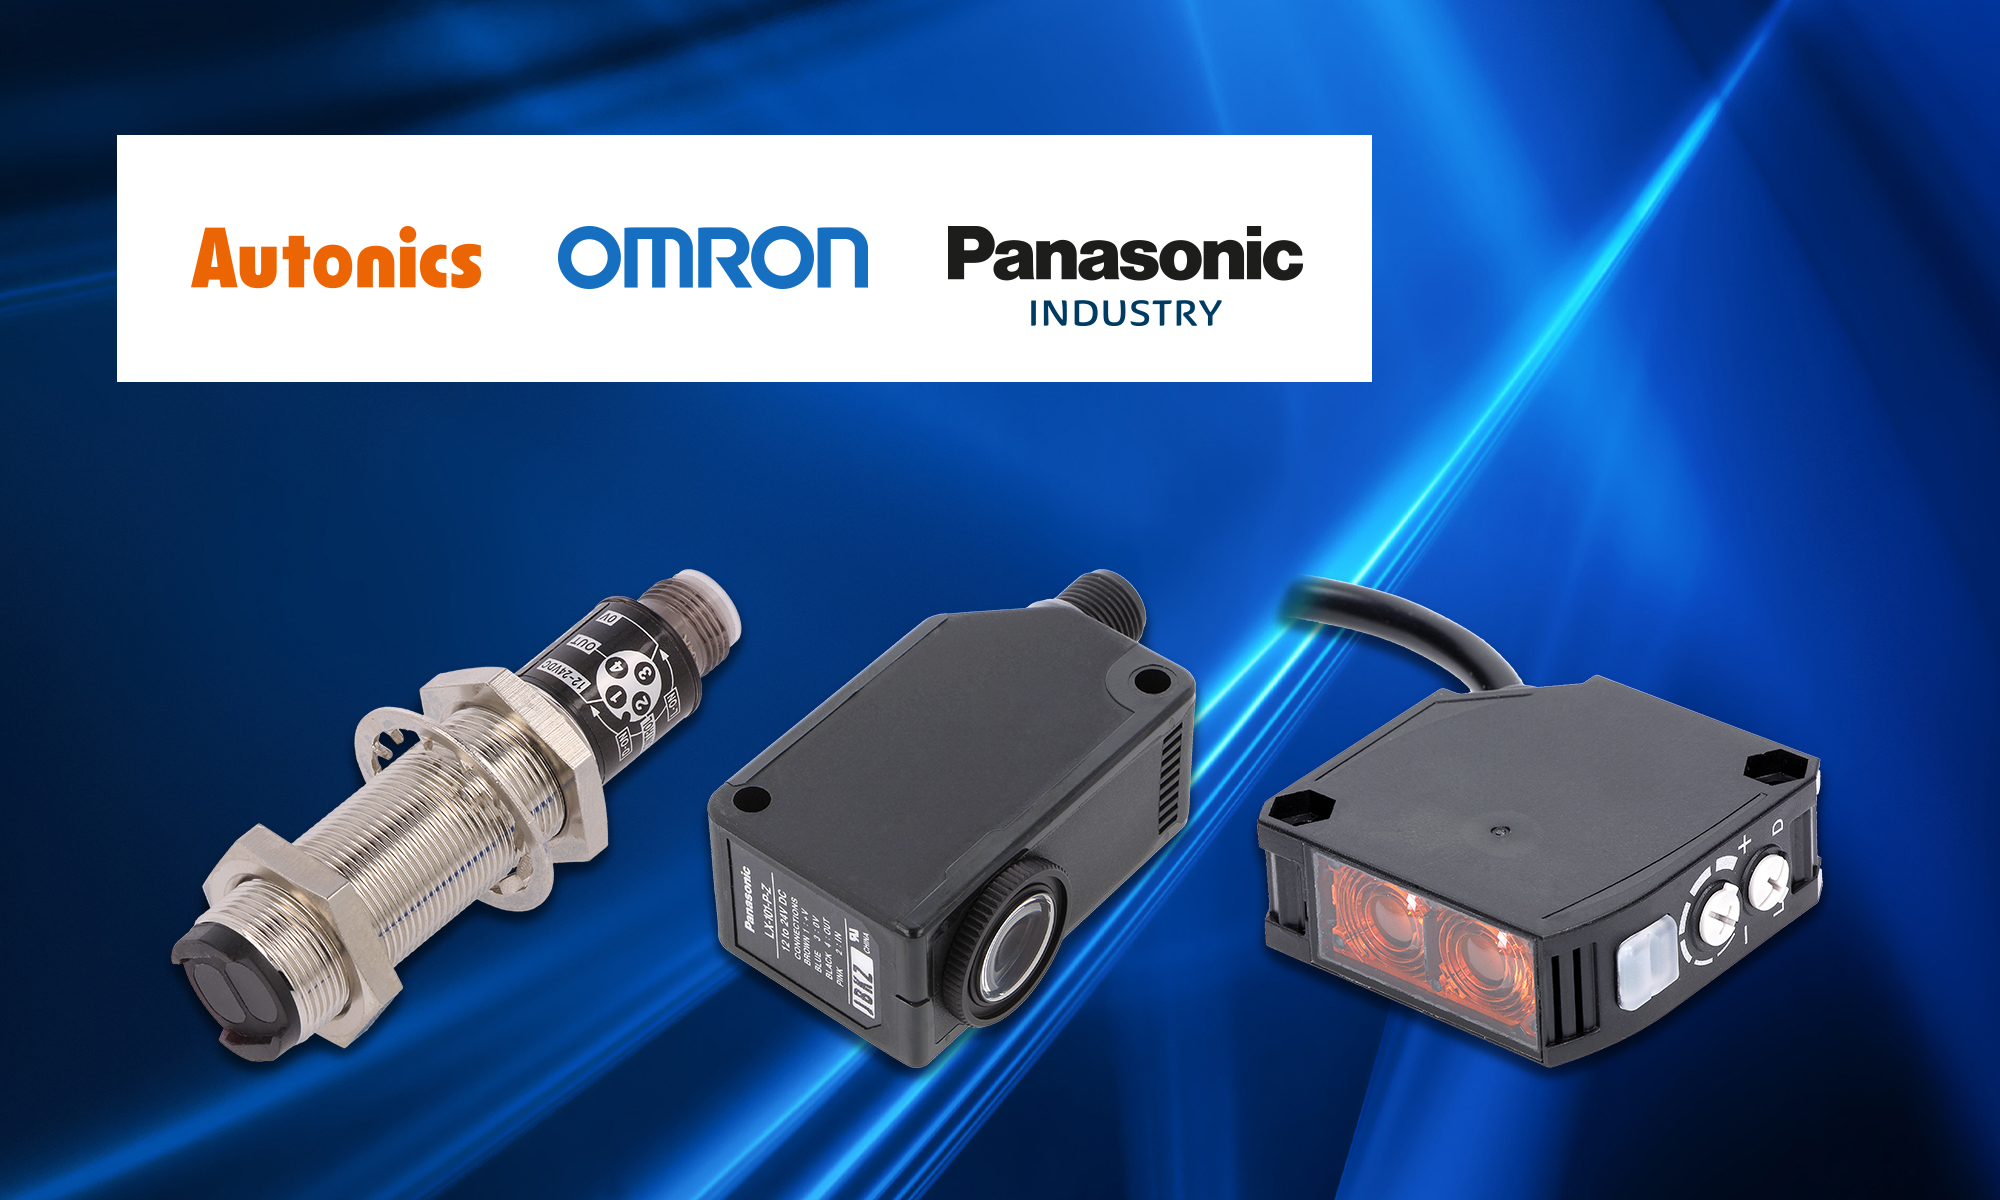 PANASONIC | Electronic components. Distributor, online shop 